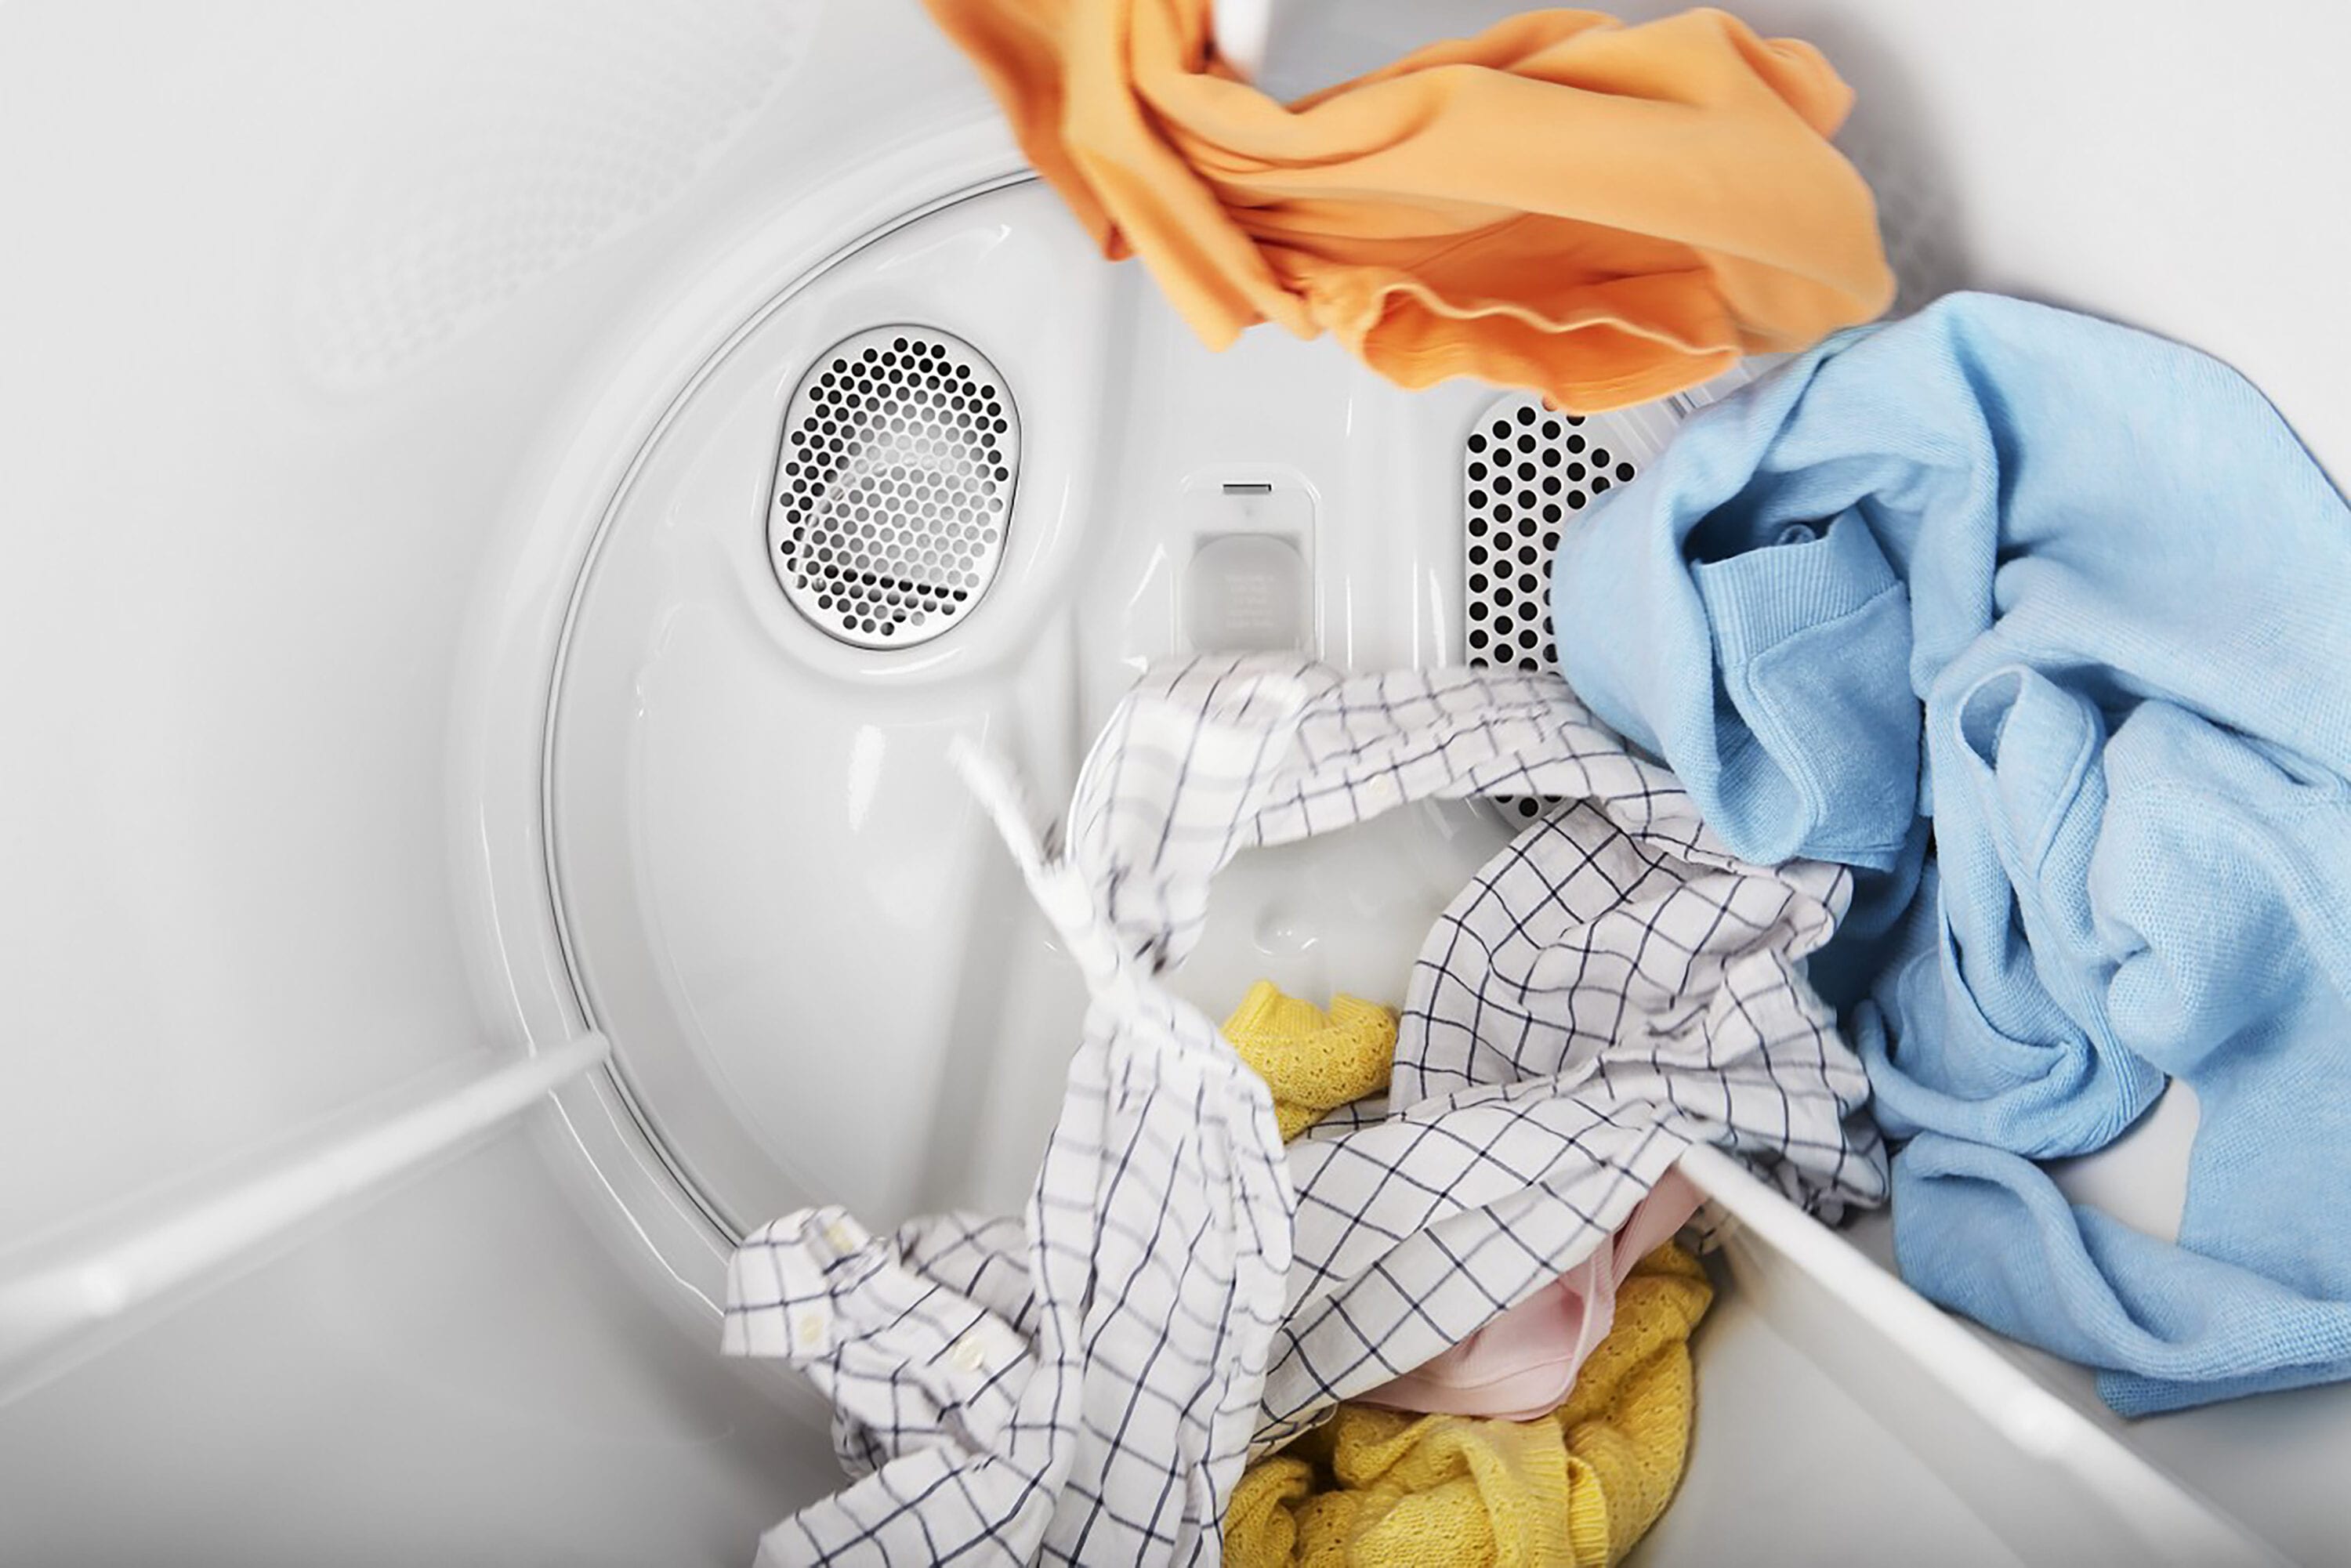 Used Whirlpool washing machine (white) “like new” - Appliances - Denver,  Colorado, Facebook Marketplace